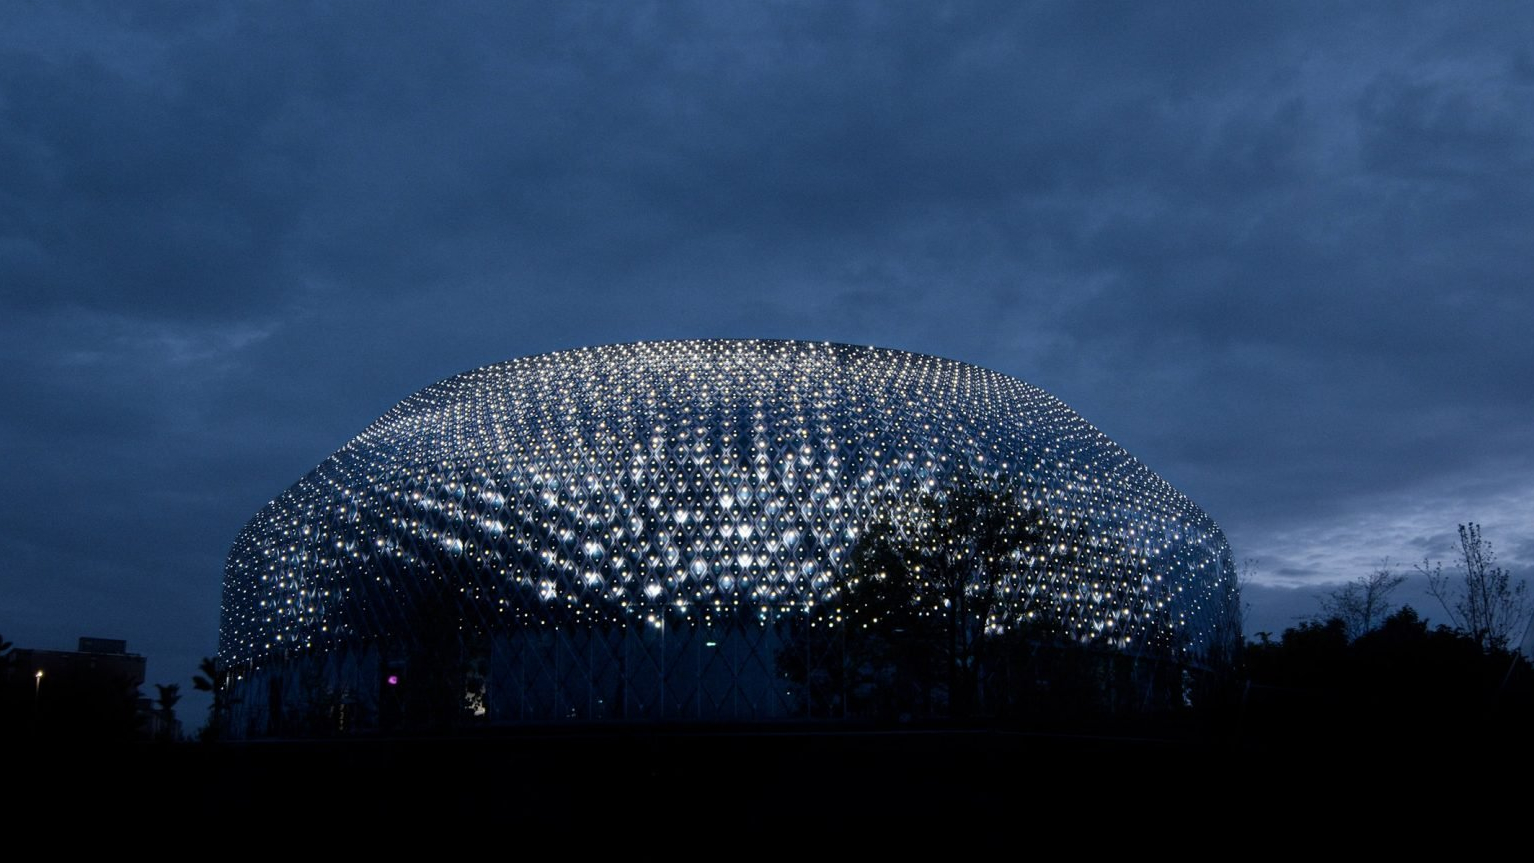 Dezeen Debate features "impressive" Basel pavilion